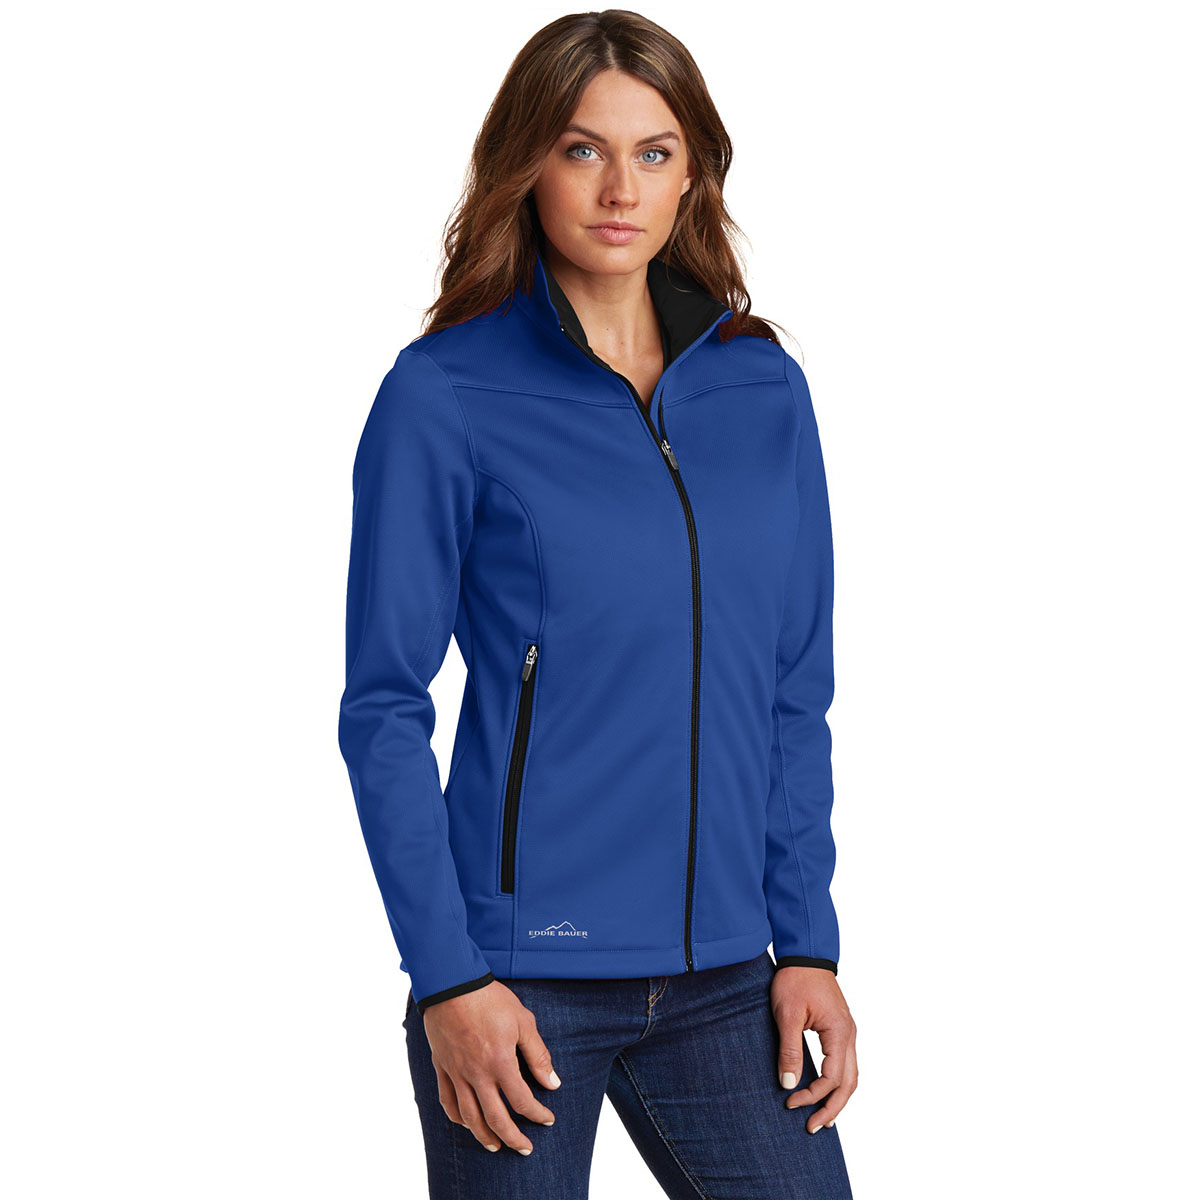 Eddie Bauer EB539 Ladies Weather-Resistant Soft Shell Jacket - Cobalt ...